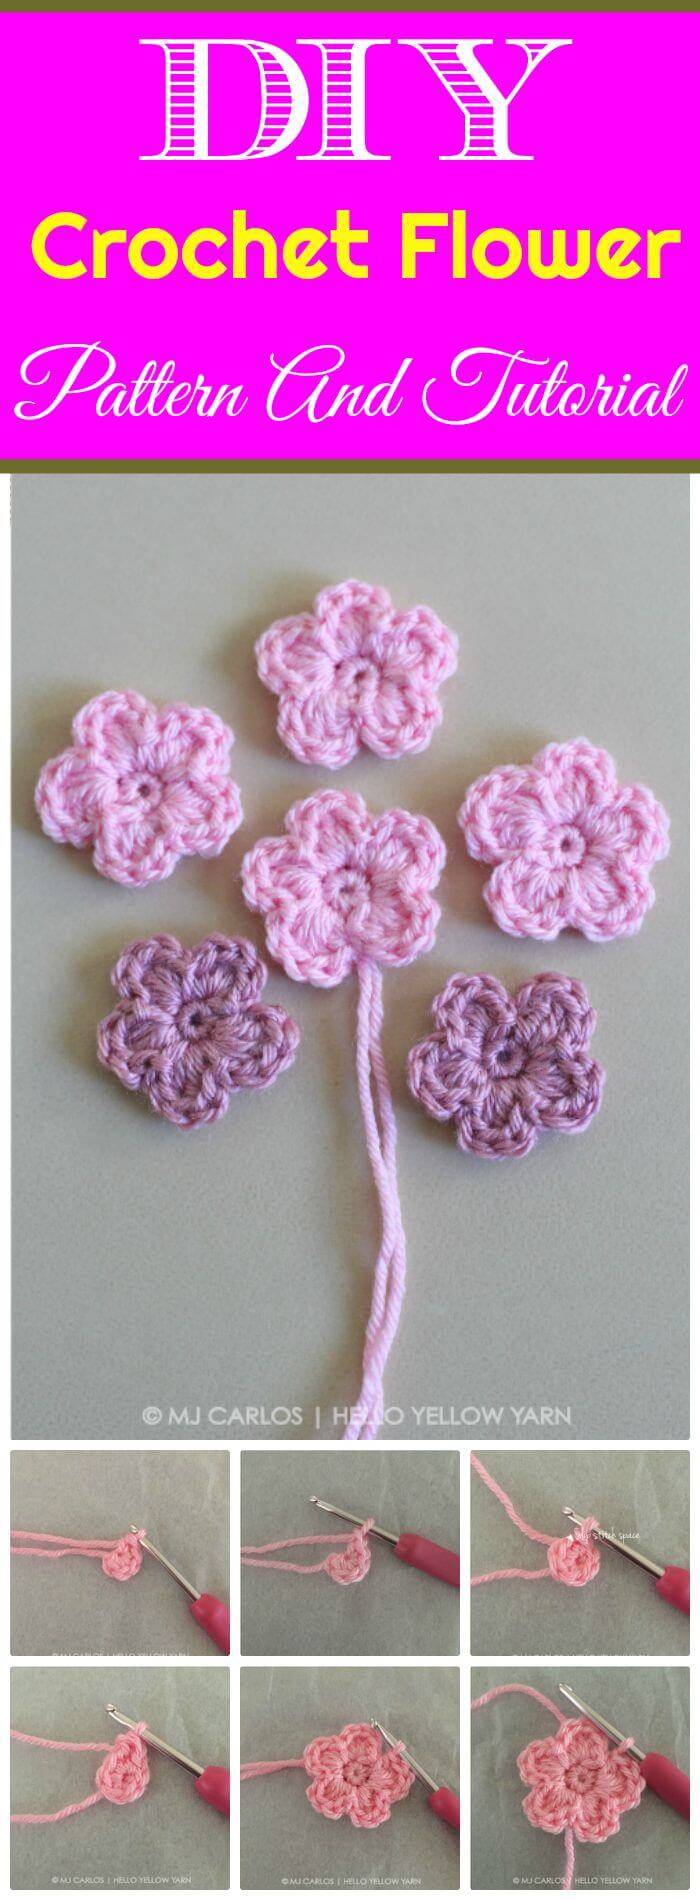 DIY Simple Crochet Flower – Pattern and Tutorial, How to crochet flowers projects! Free crohet flower Patterns!